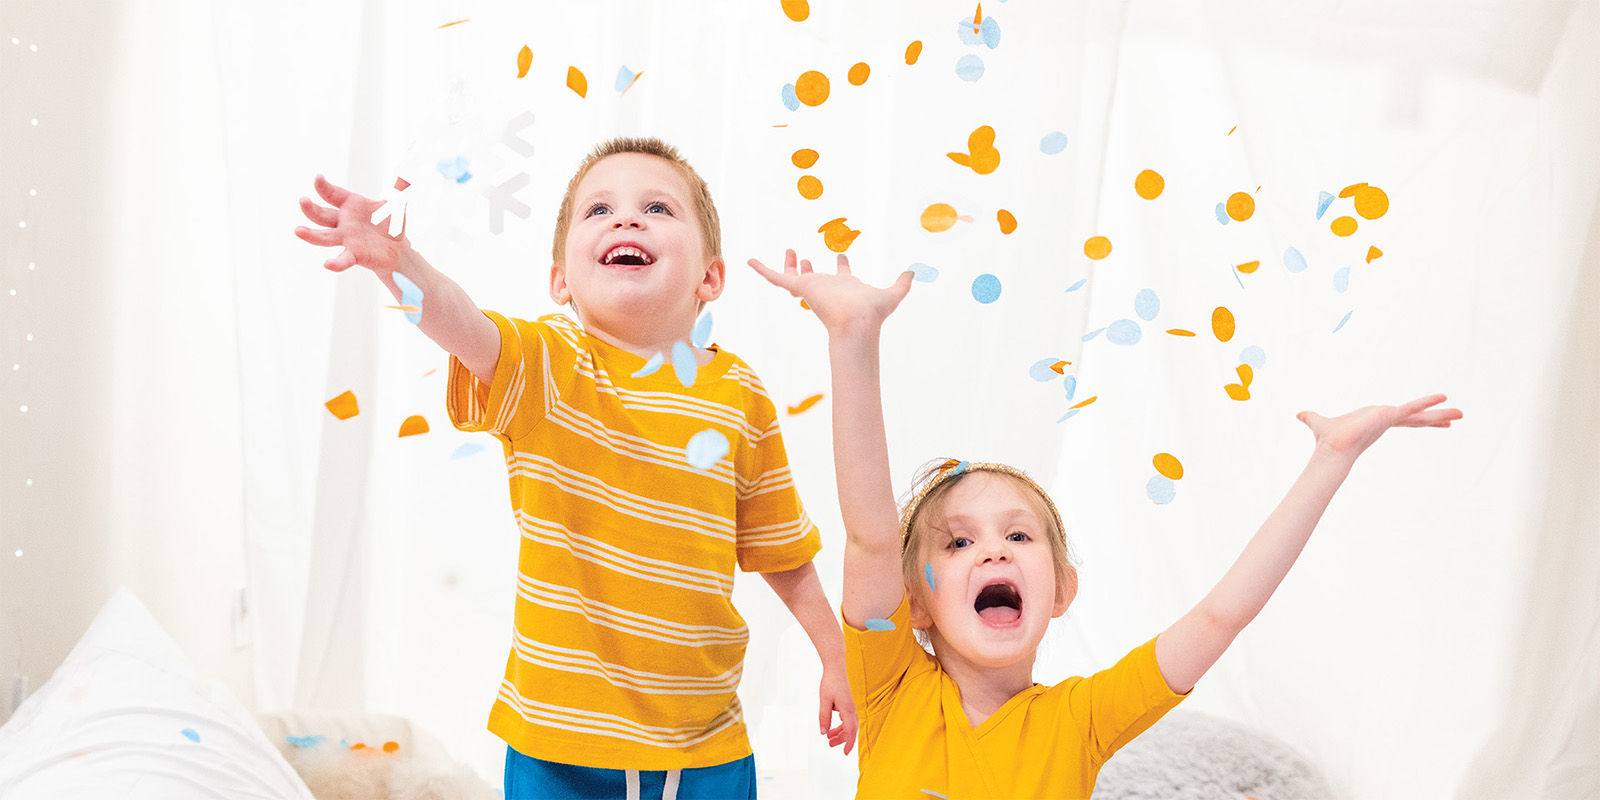 Two children throwing confetti